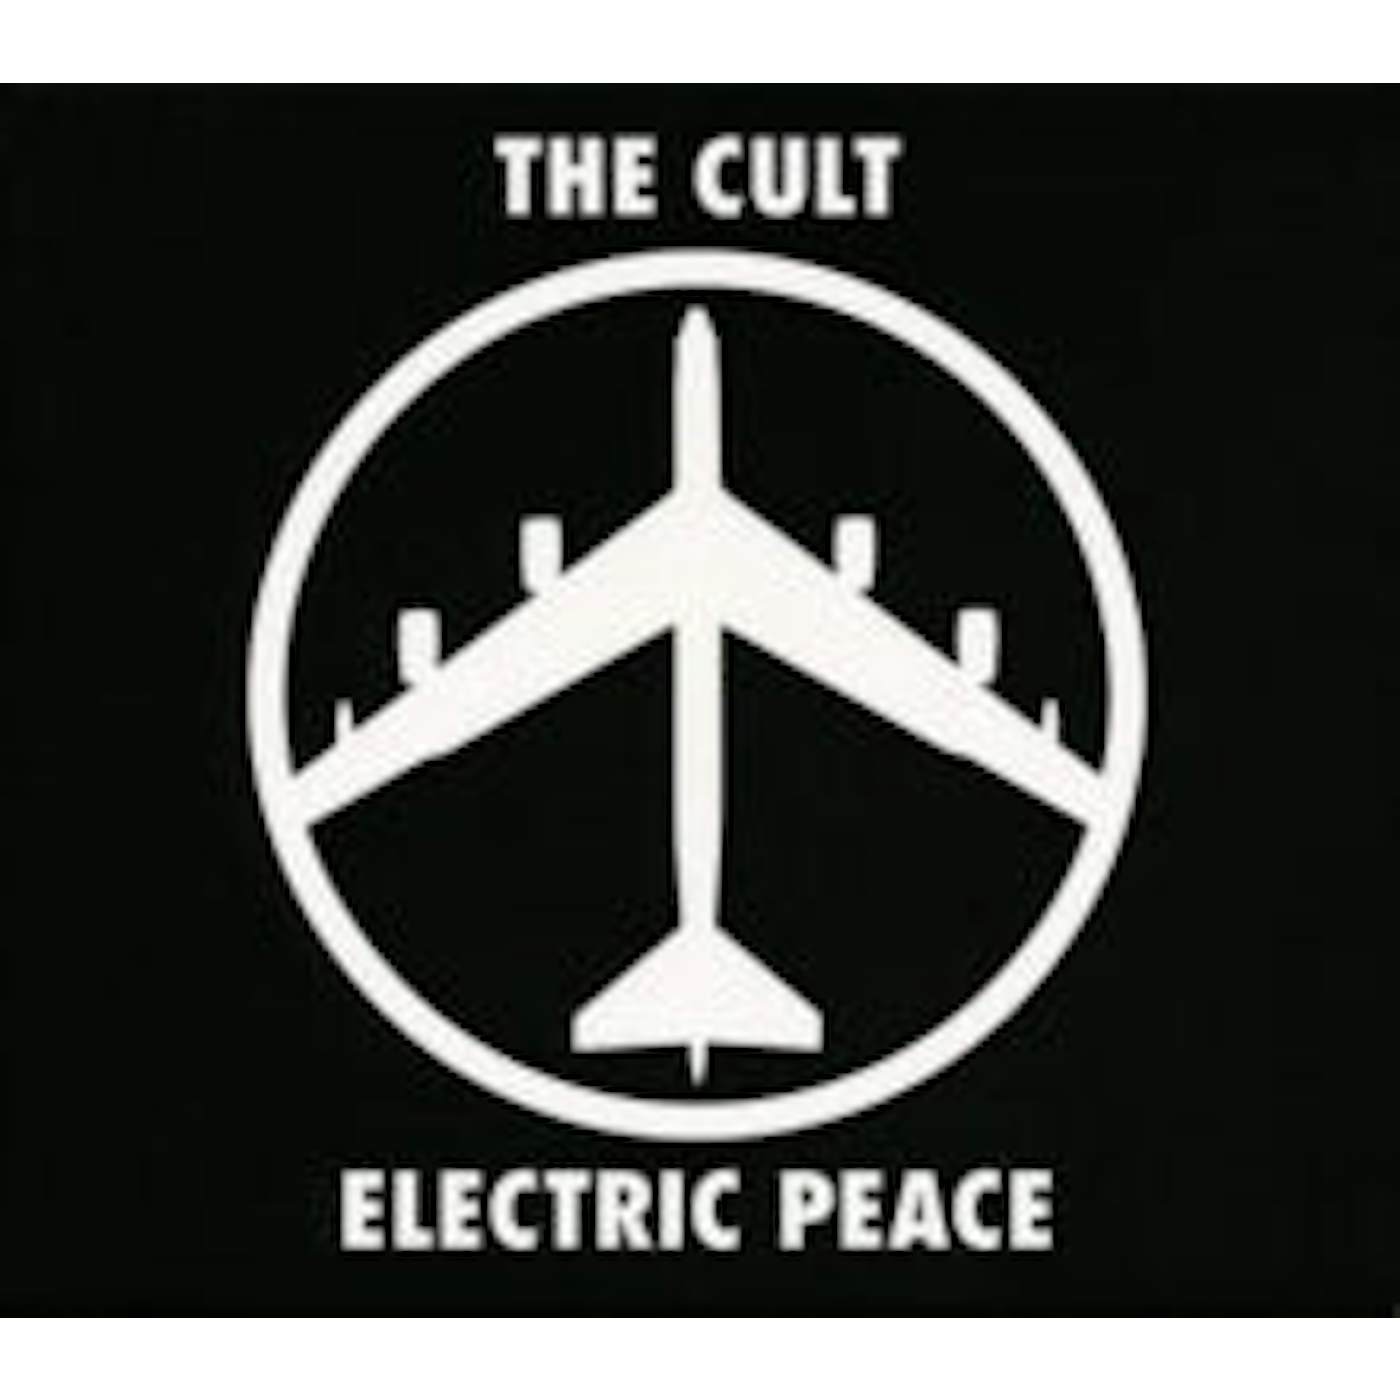 The Cult LP Vinyl Record - Electric Peace